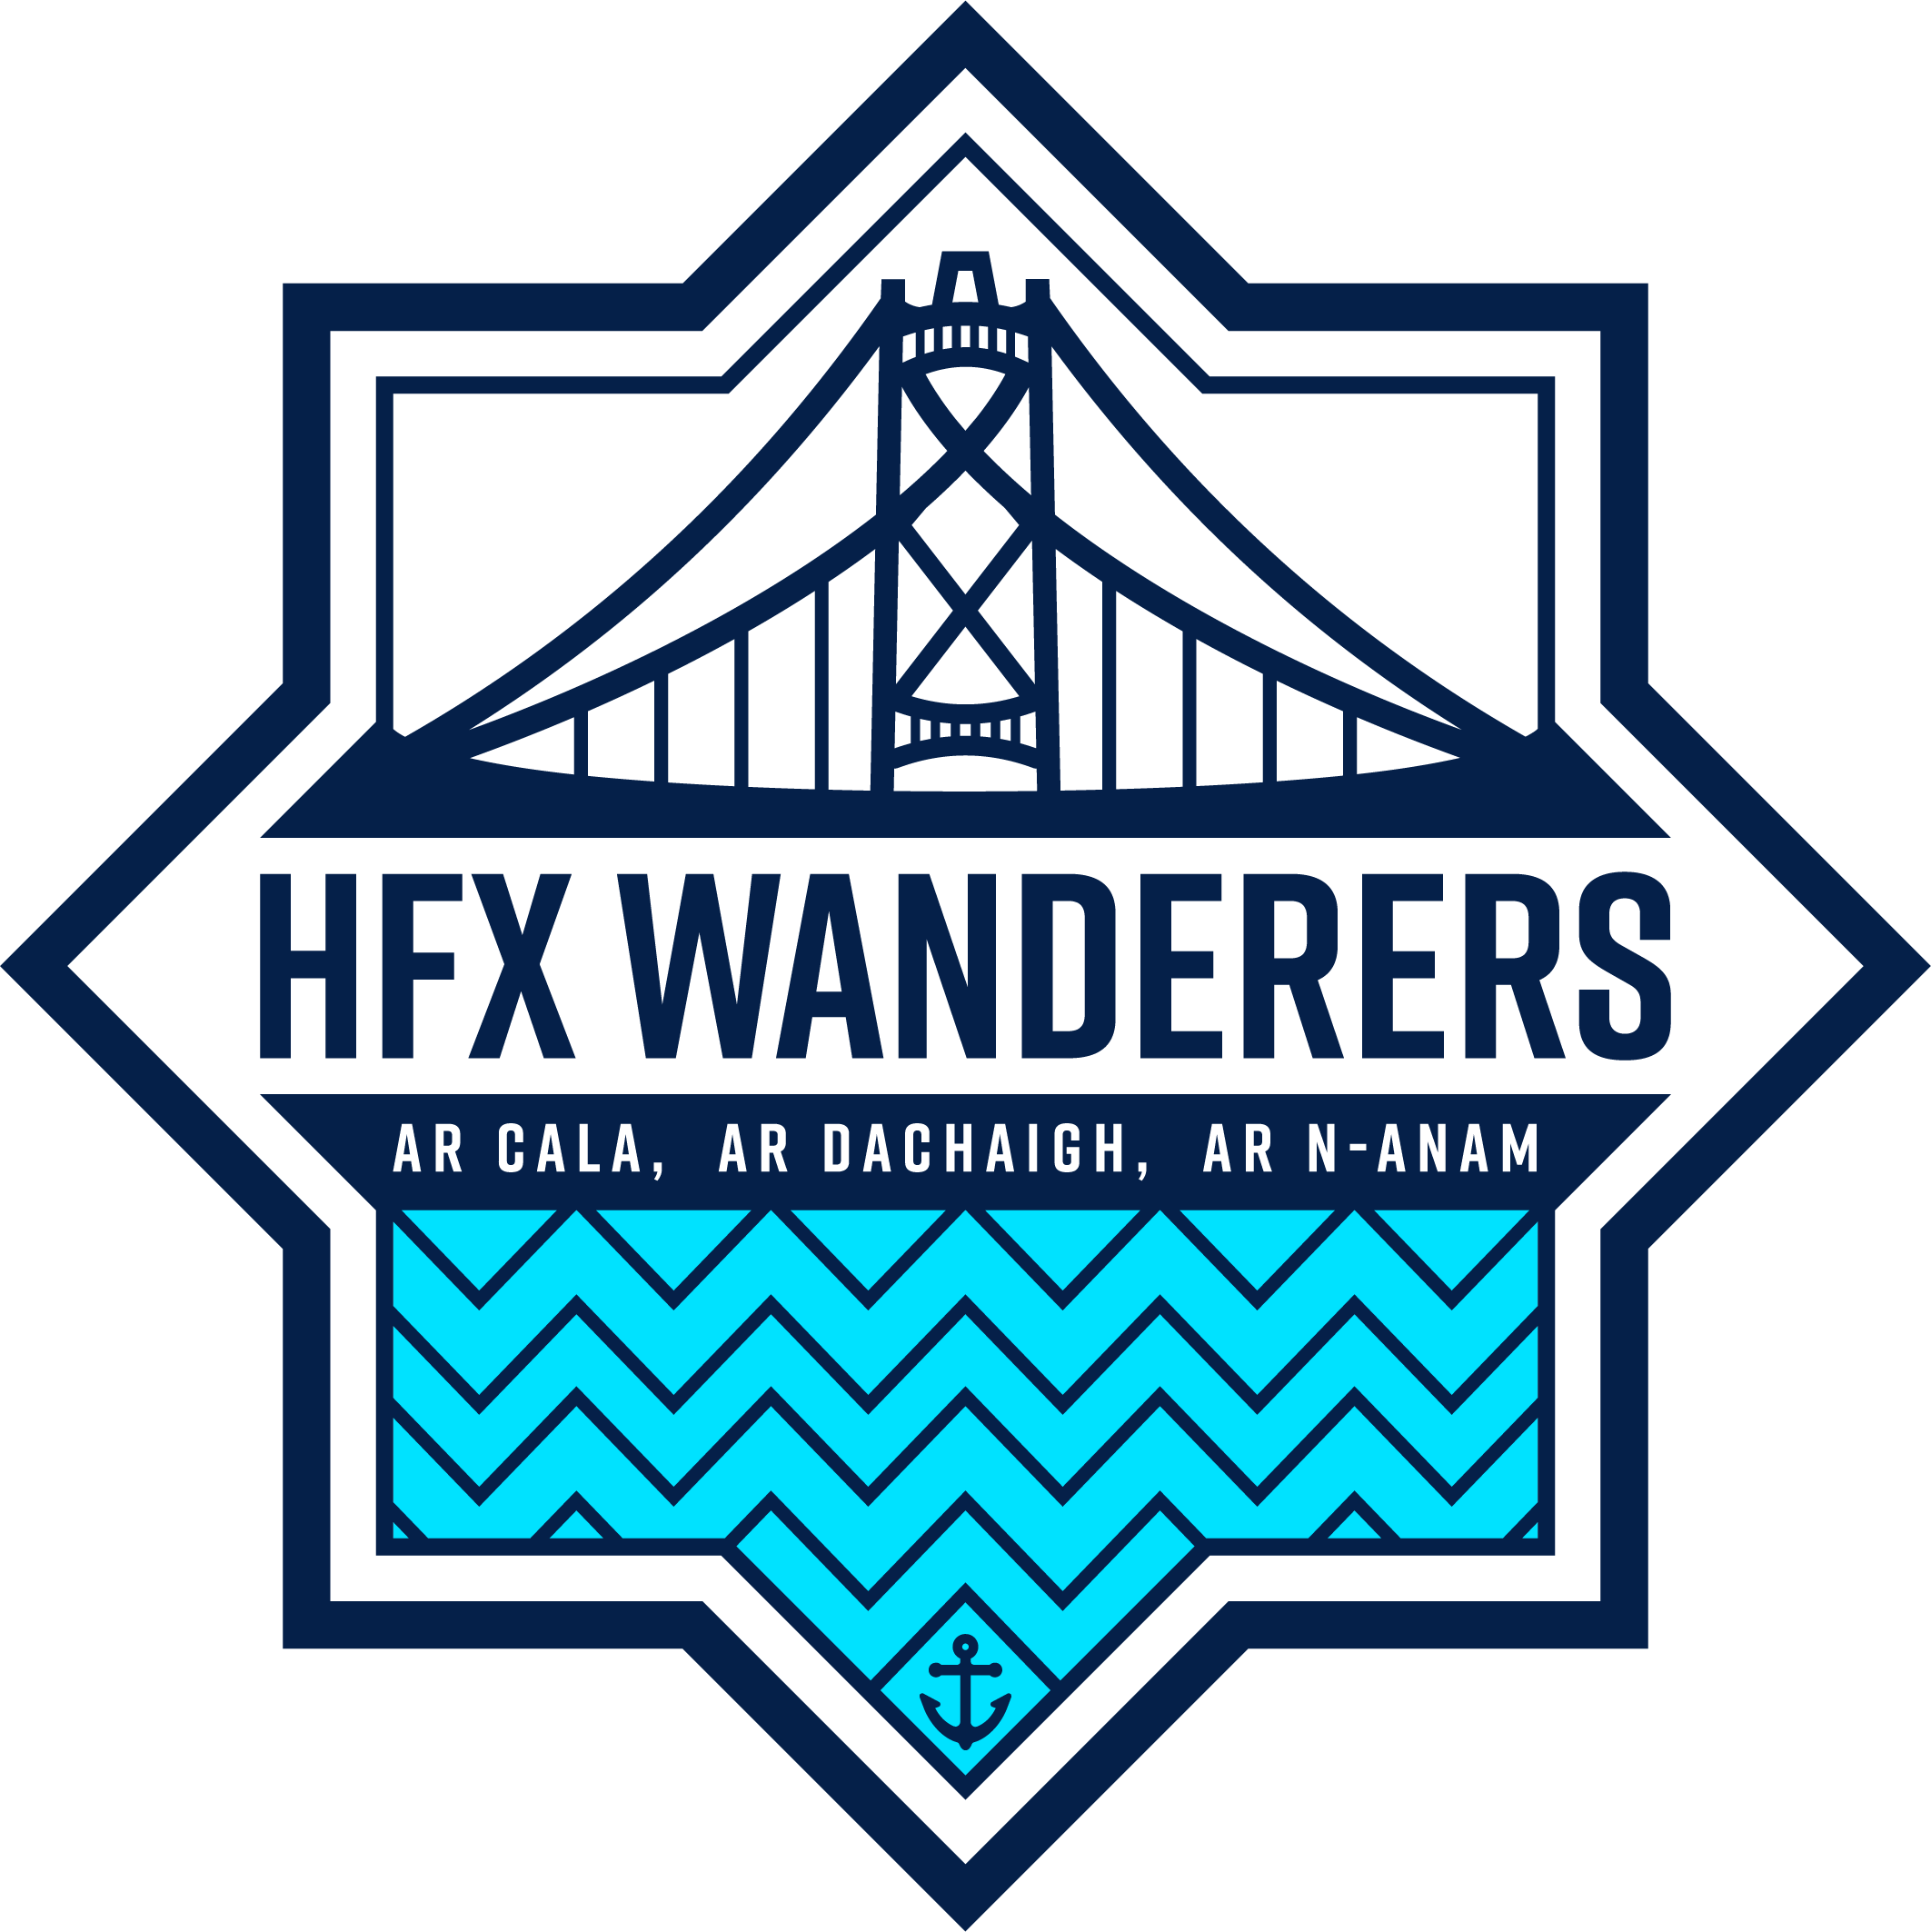 Halifax Logo - Wanderers club crest scores win in CPL logo contest